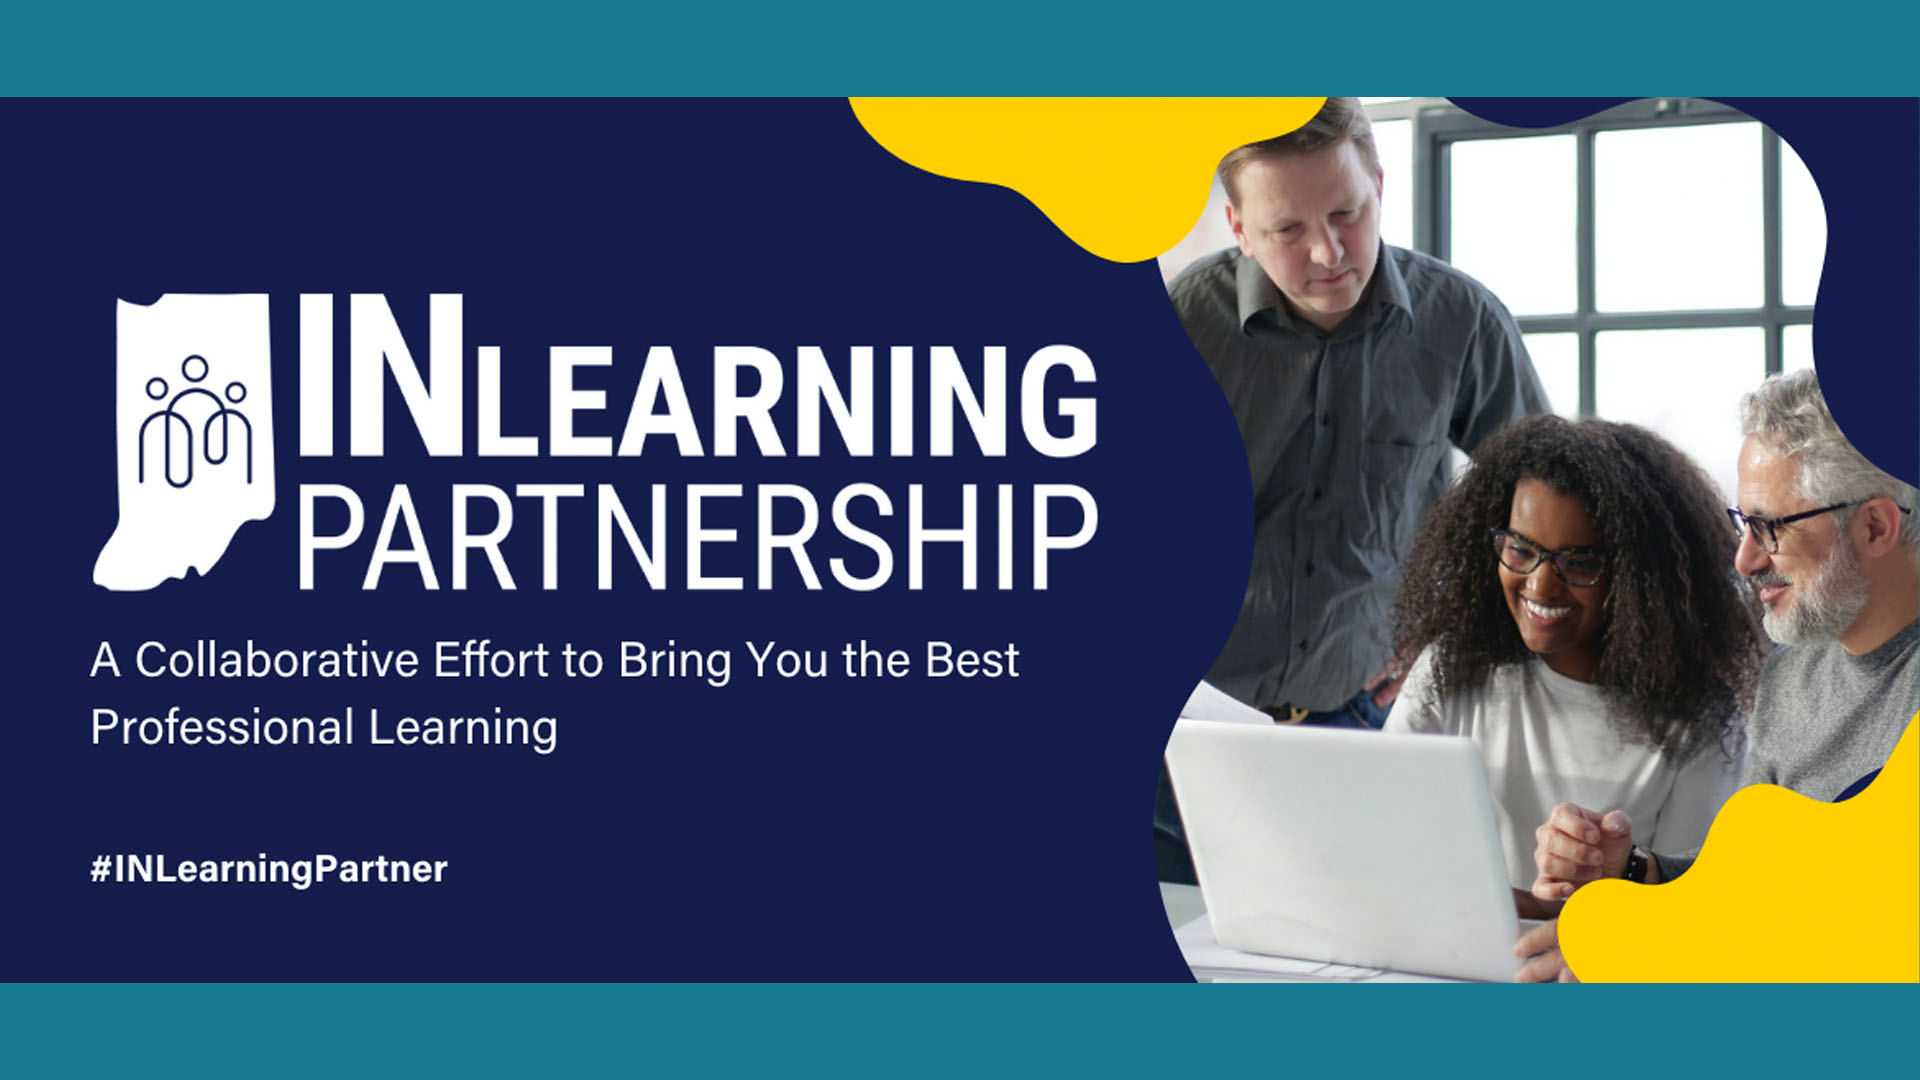 INLearning Partnership